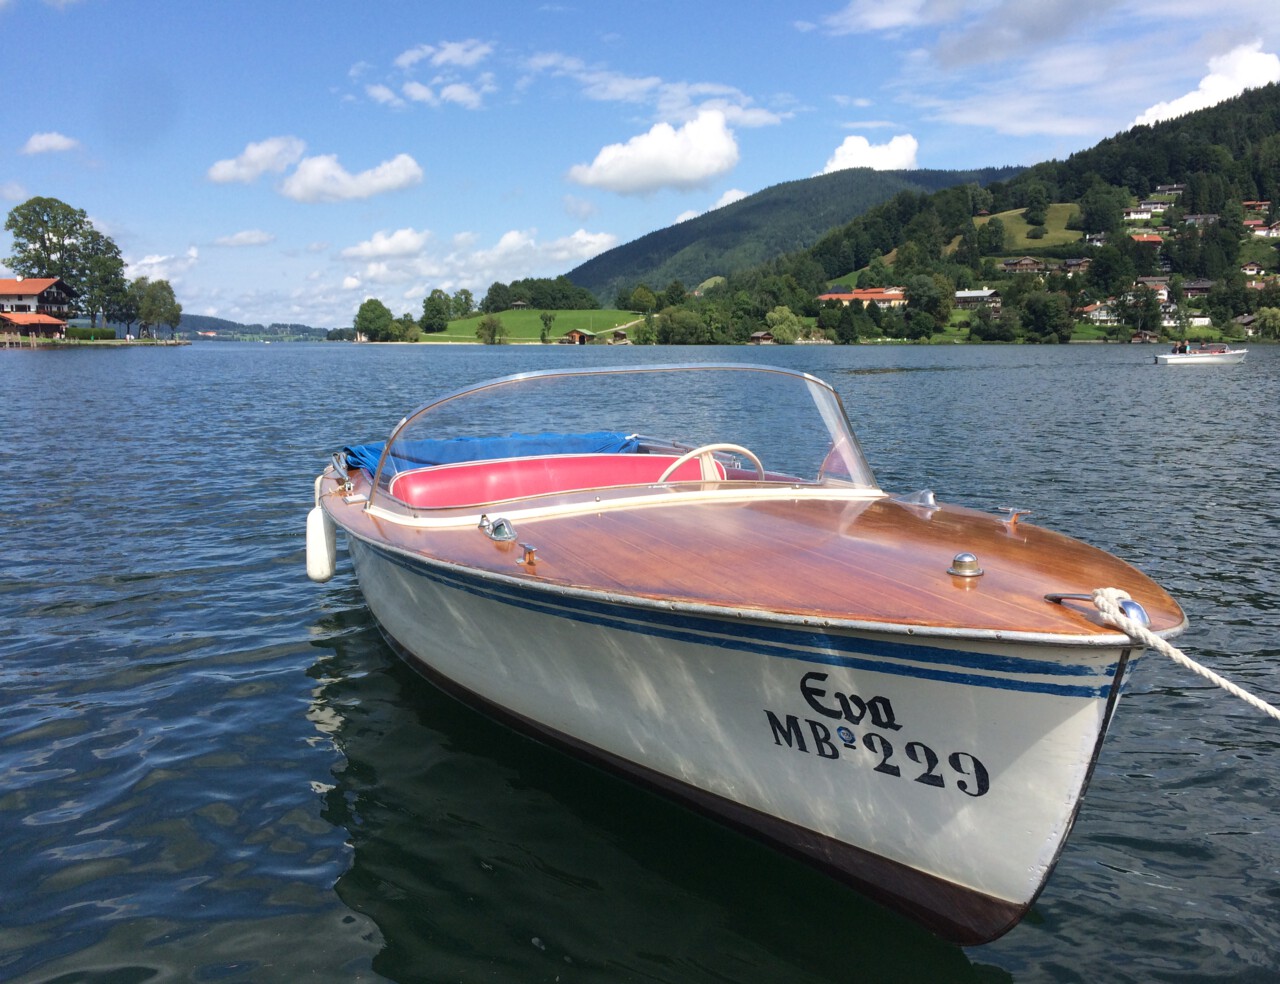 Boat tours on Lake Tegernsee